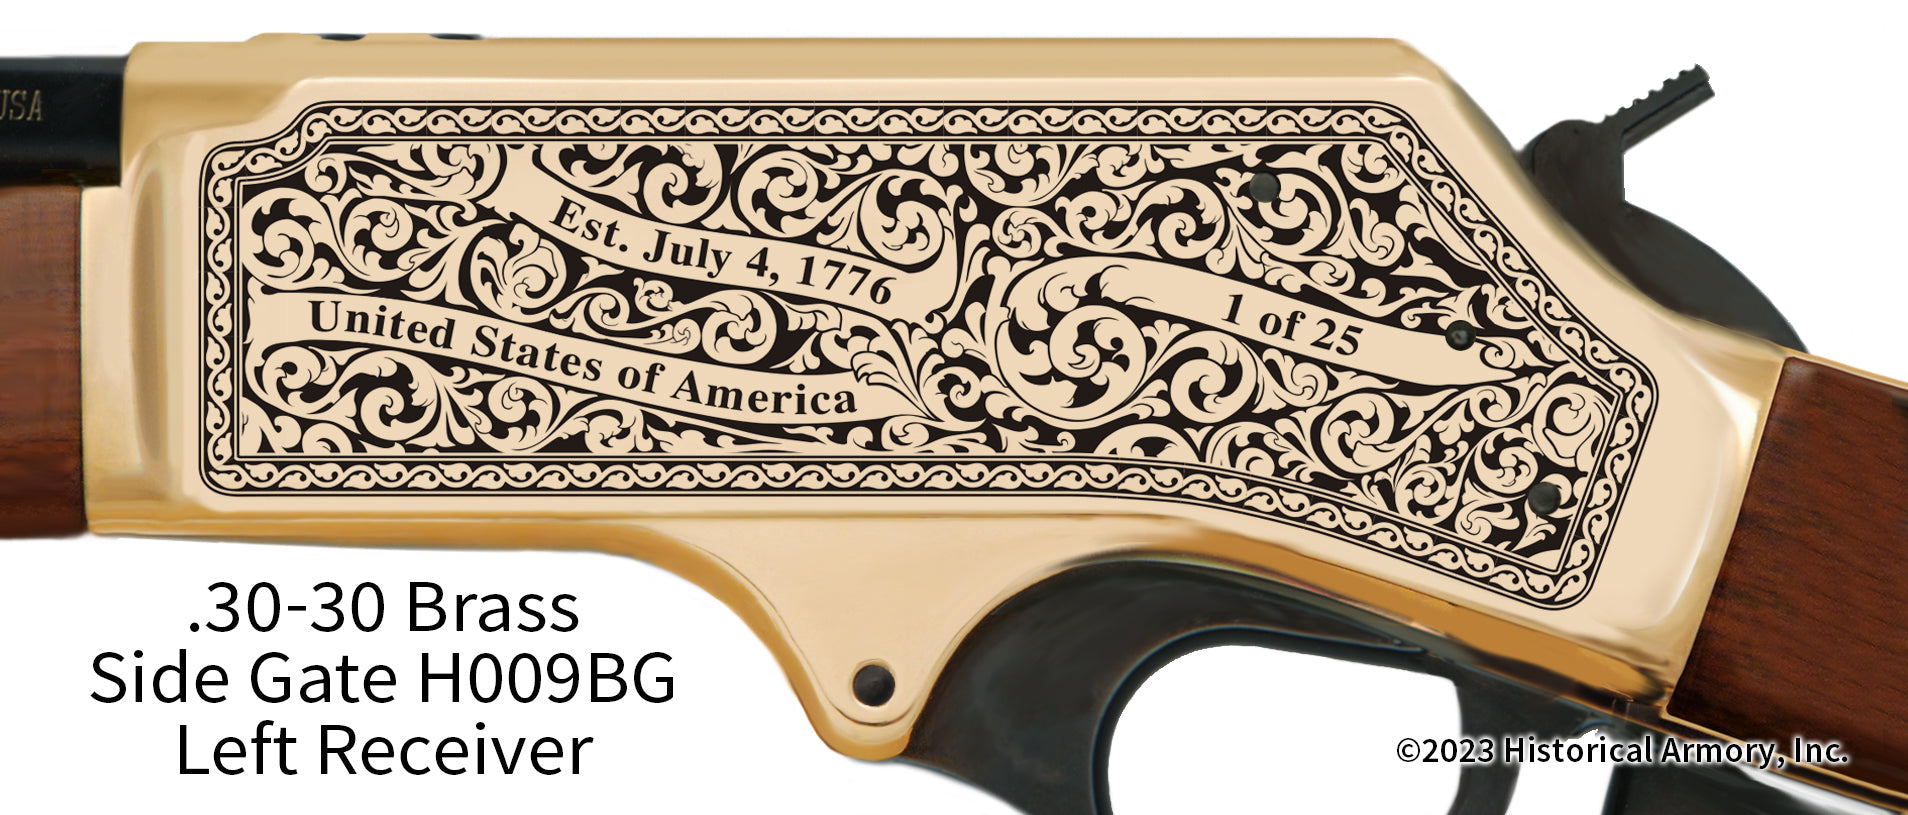 La Plata County Colorado Engraved Henry .30-30 Brass Side Gate Rifle